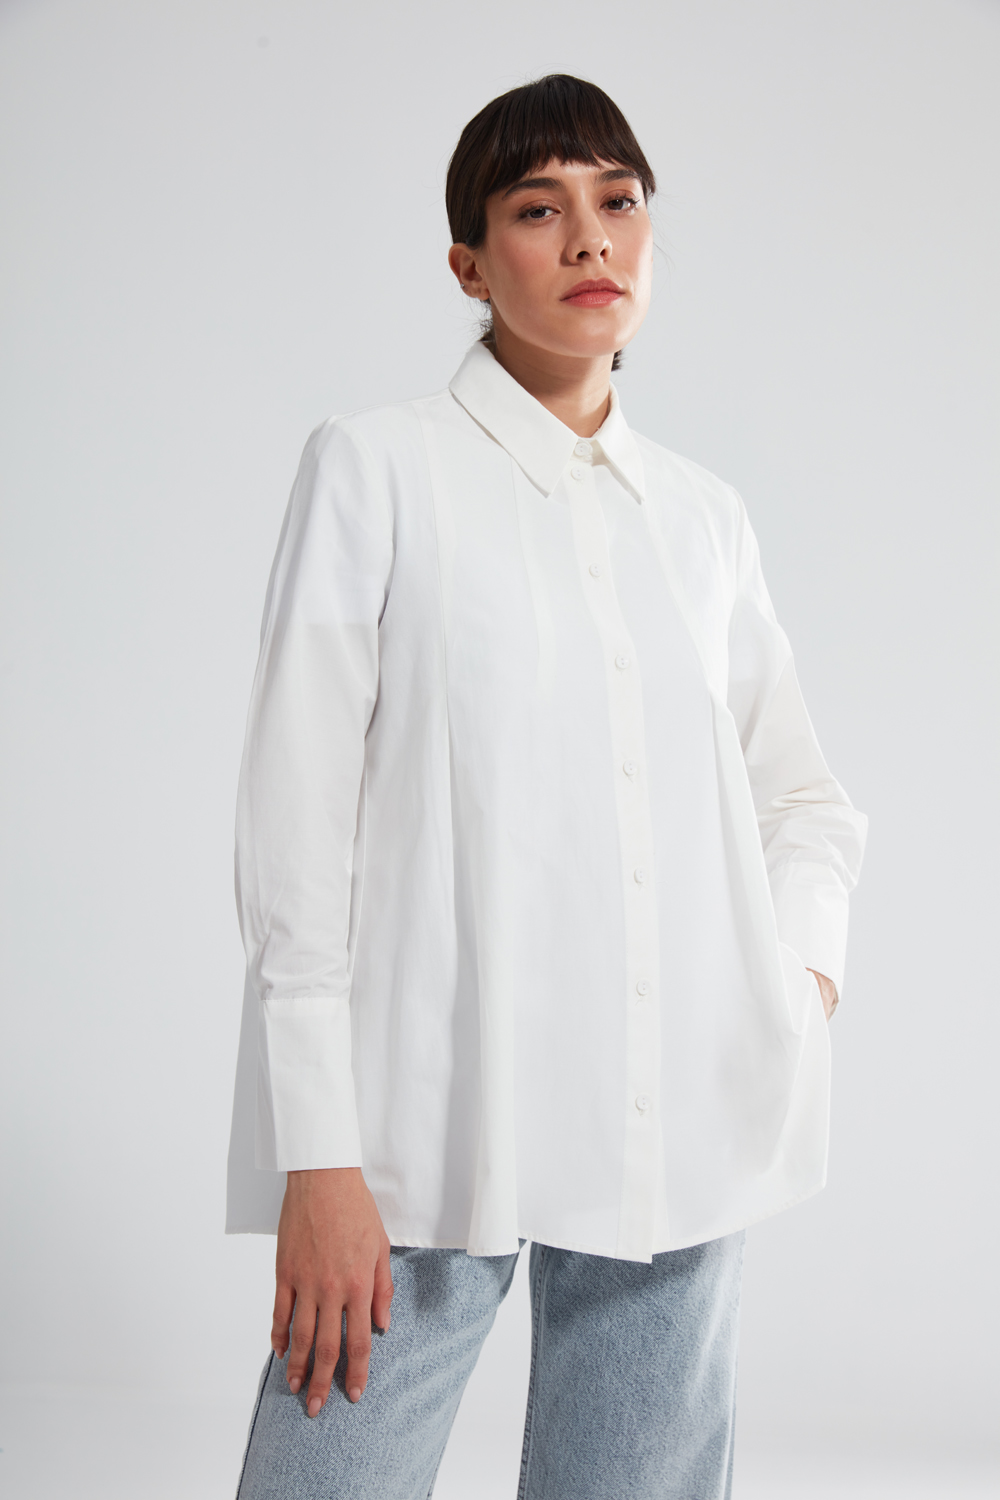 Classic Collar White Pleated Shirt